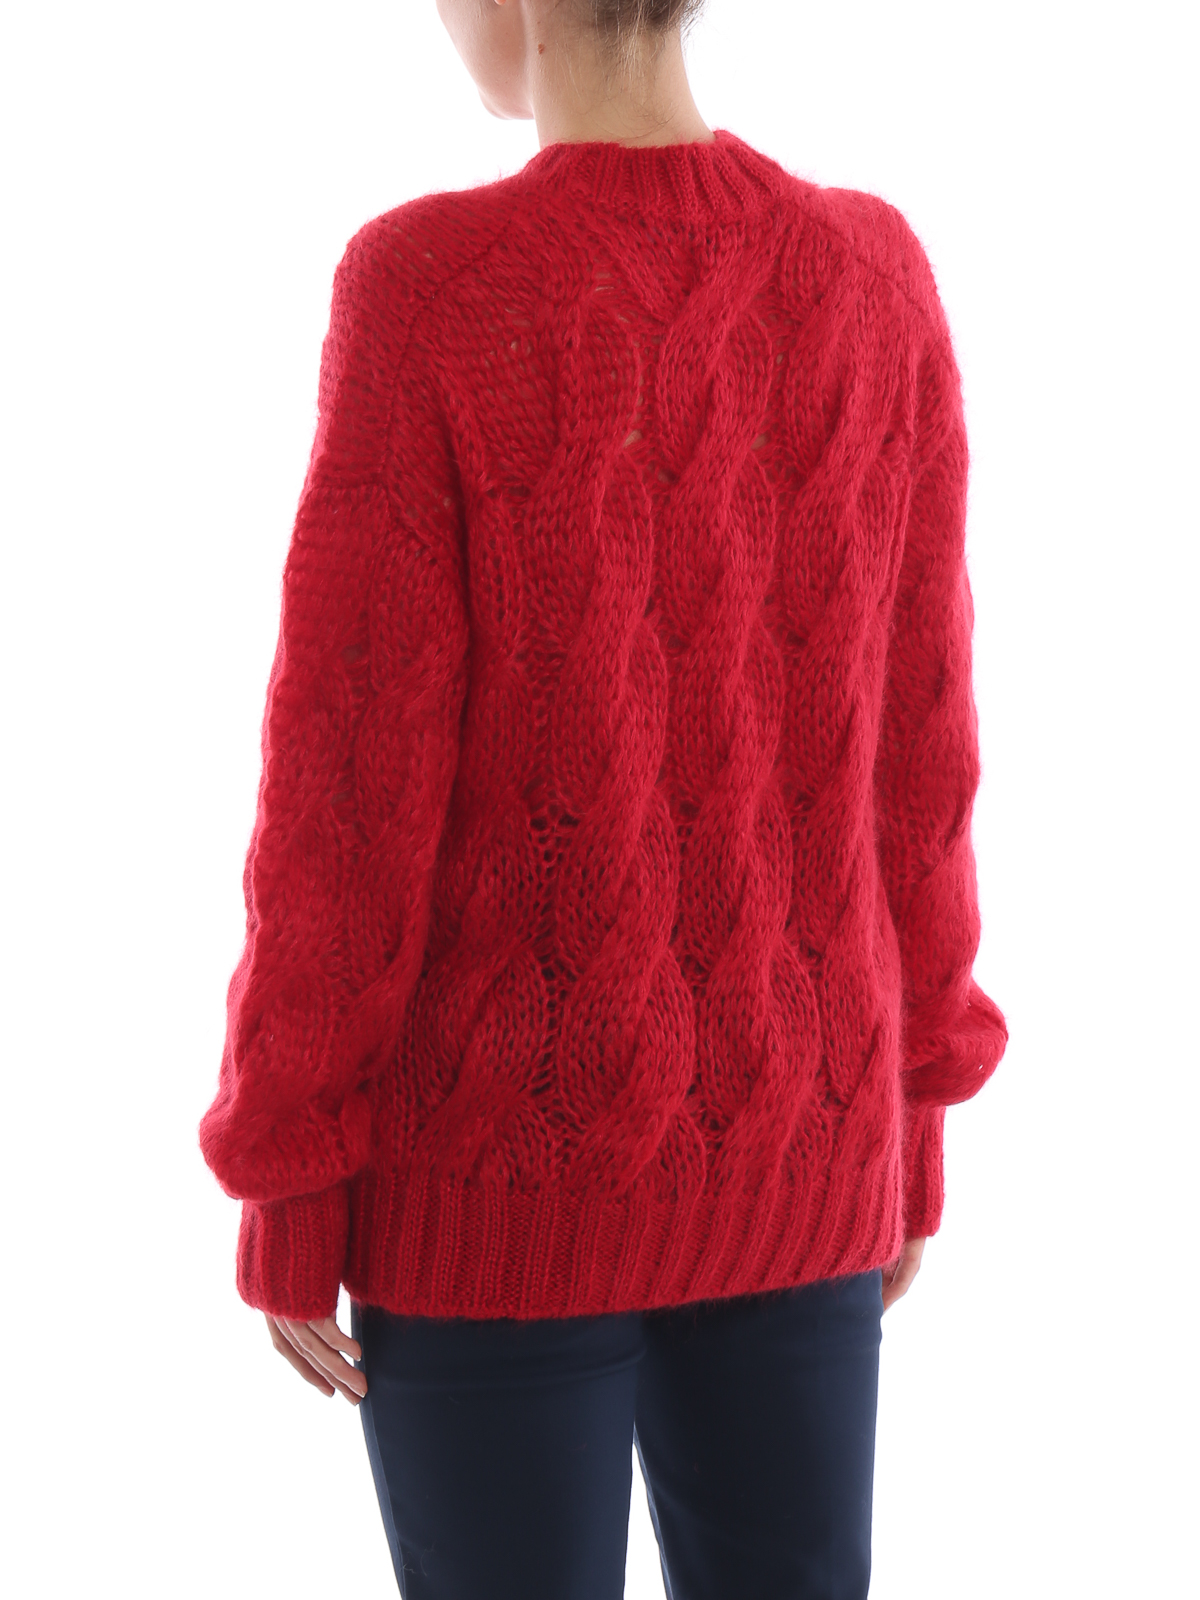 prada red sweater